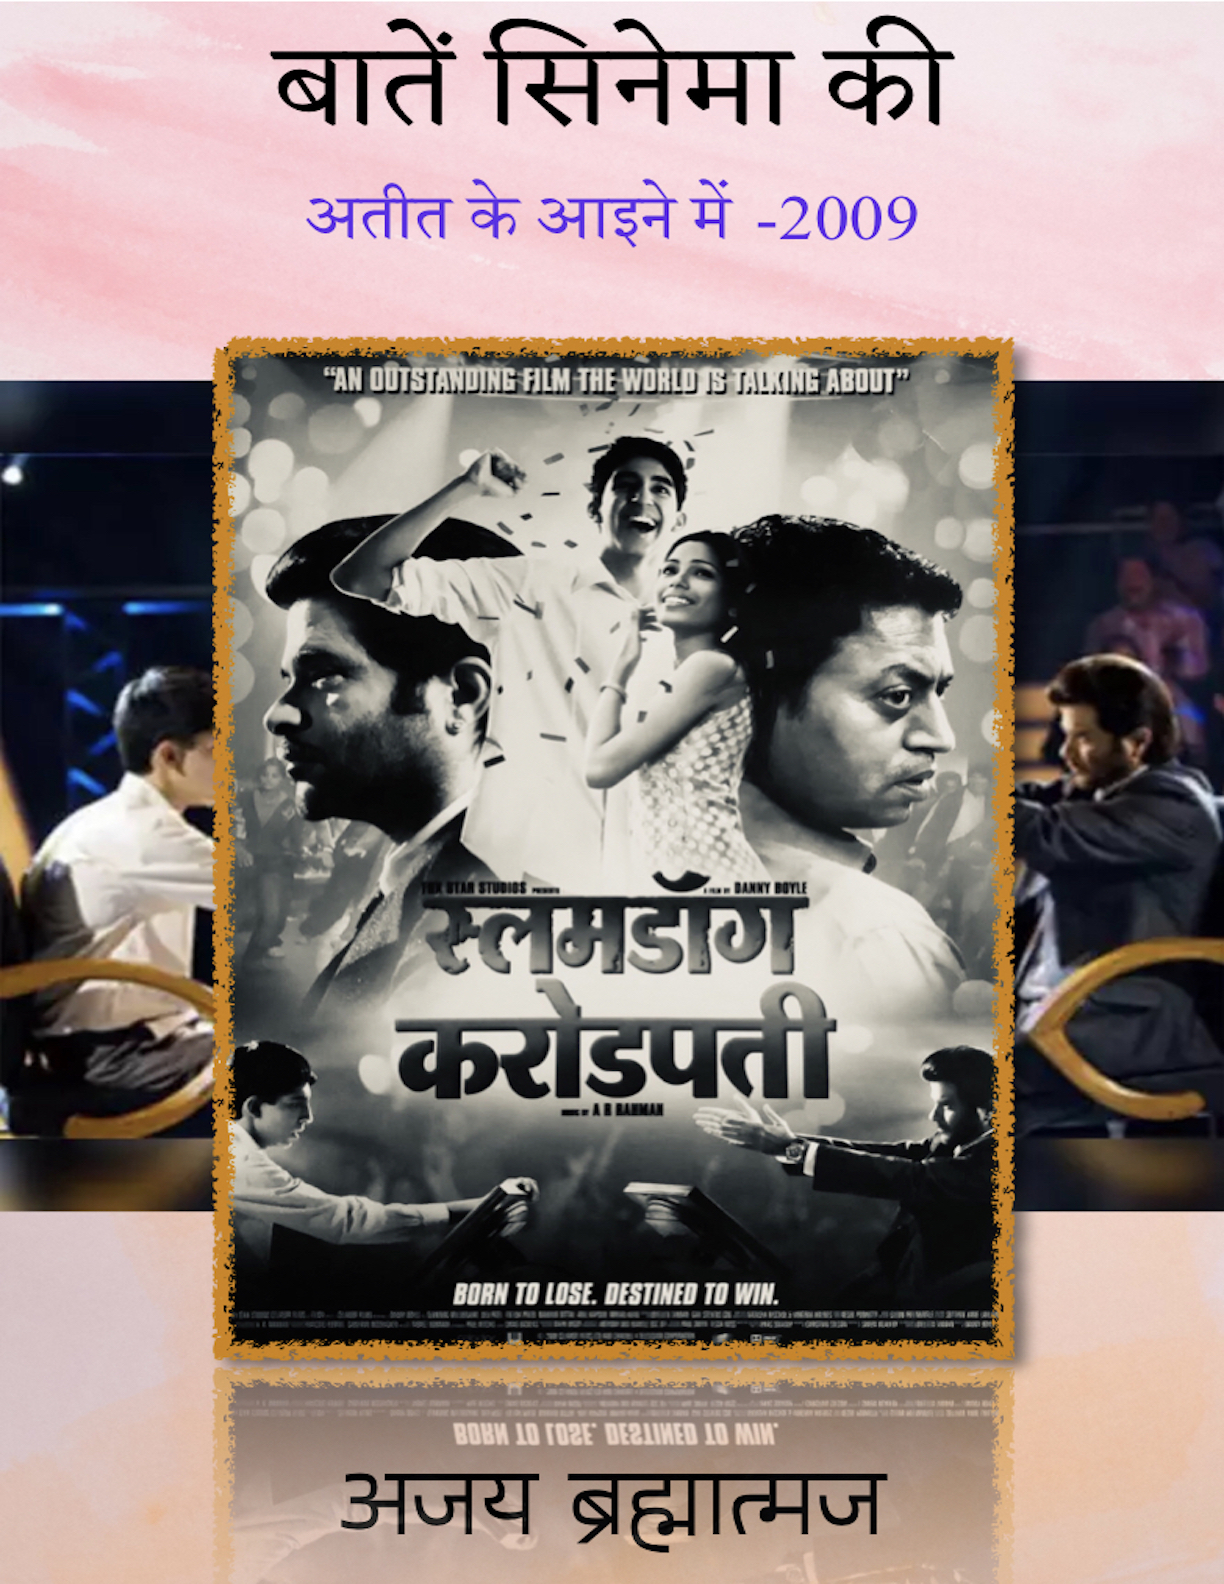 Baatein Cinema Ki Ateet Ke Aine Mein-2009